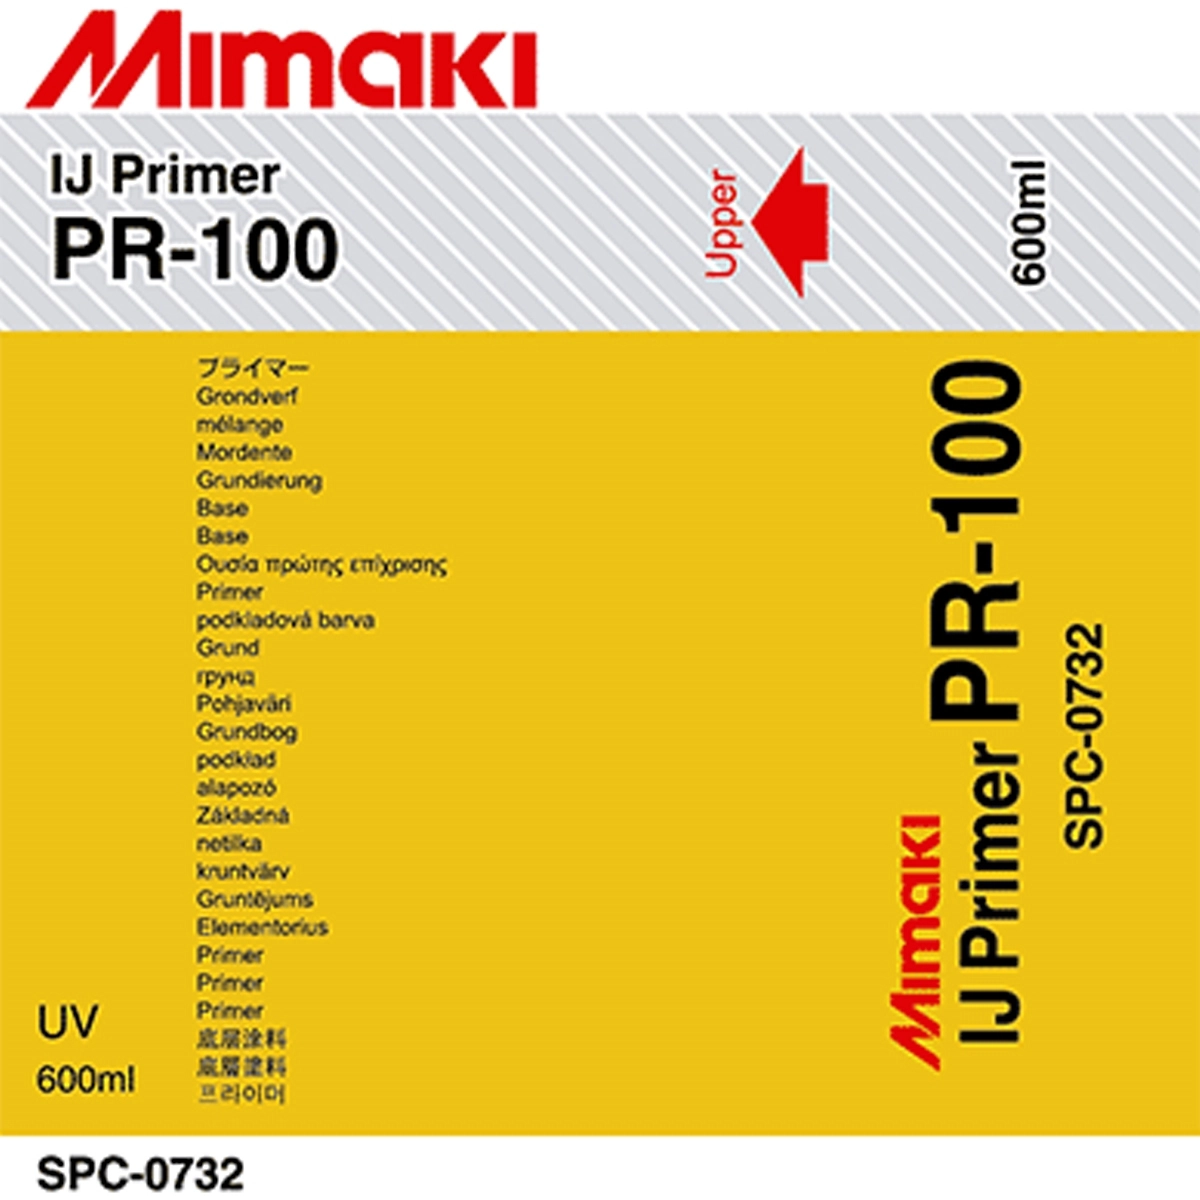 0002778_mimaki-eco-cartridge-pr-100-primer-600ml-pack